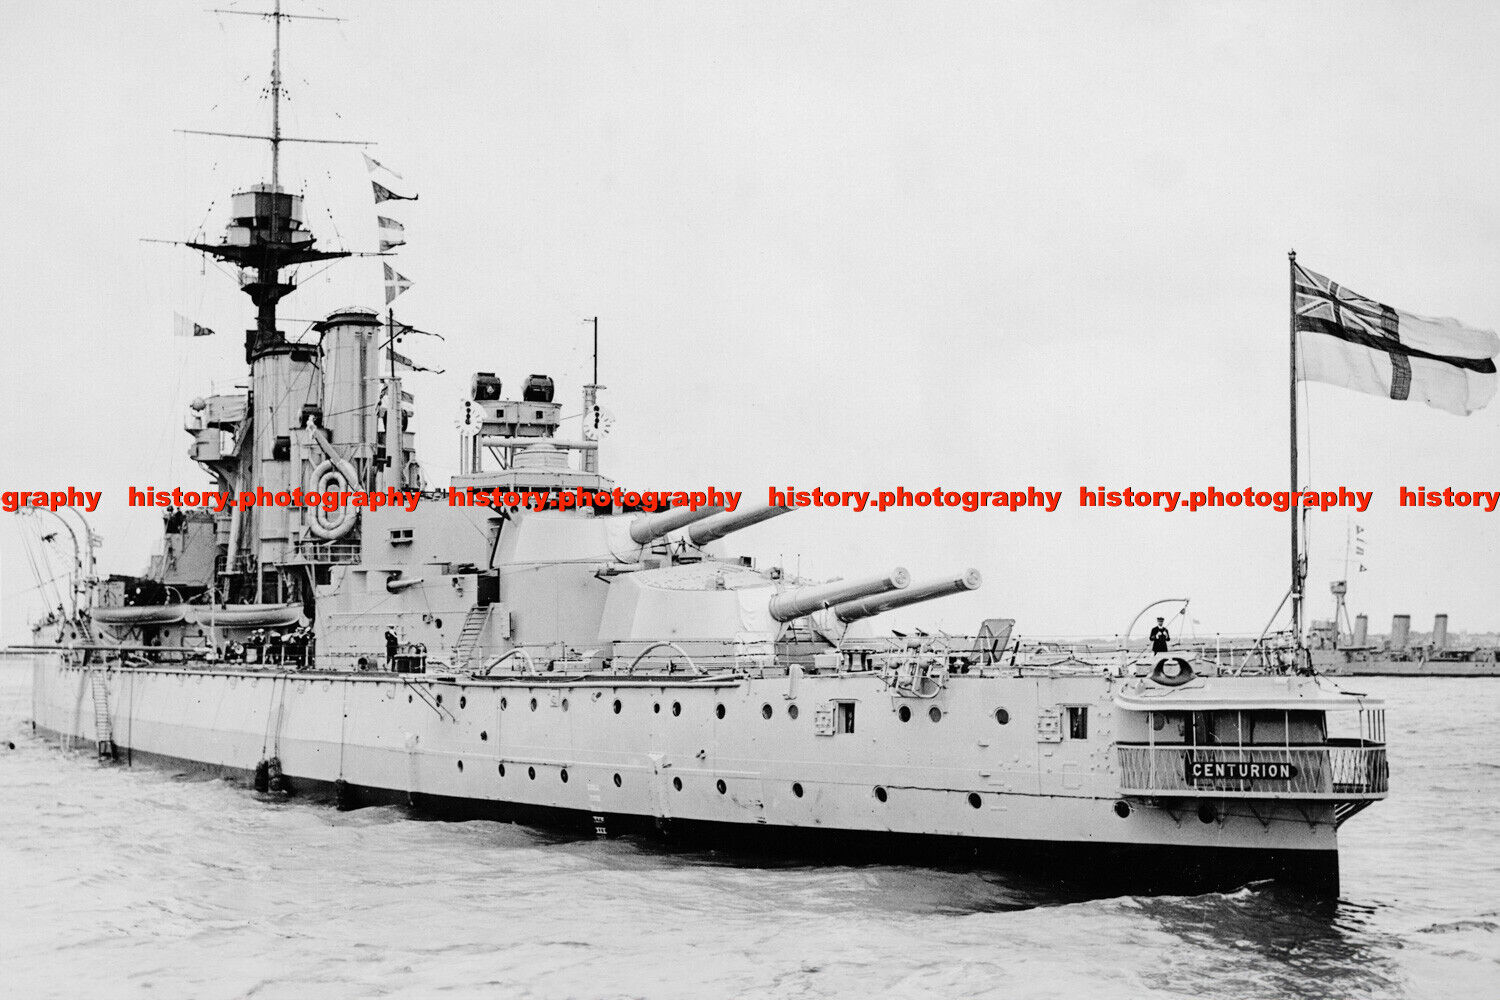 F010163 HMS Centurion. British battleship